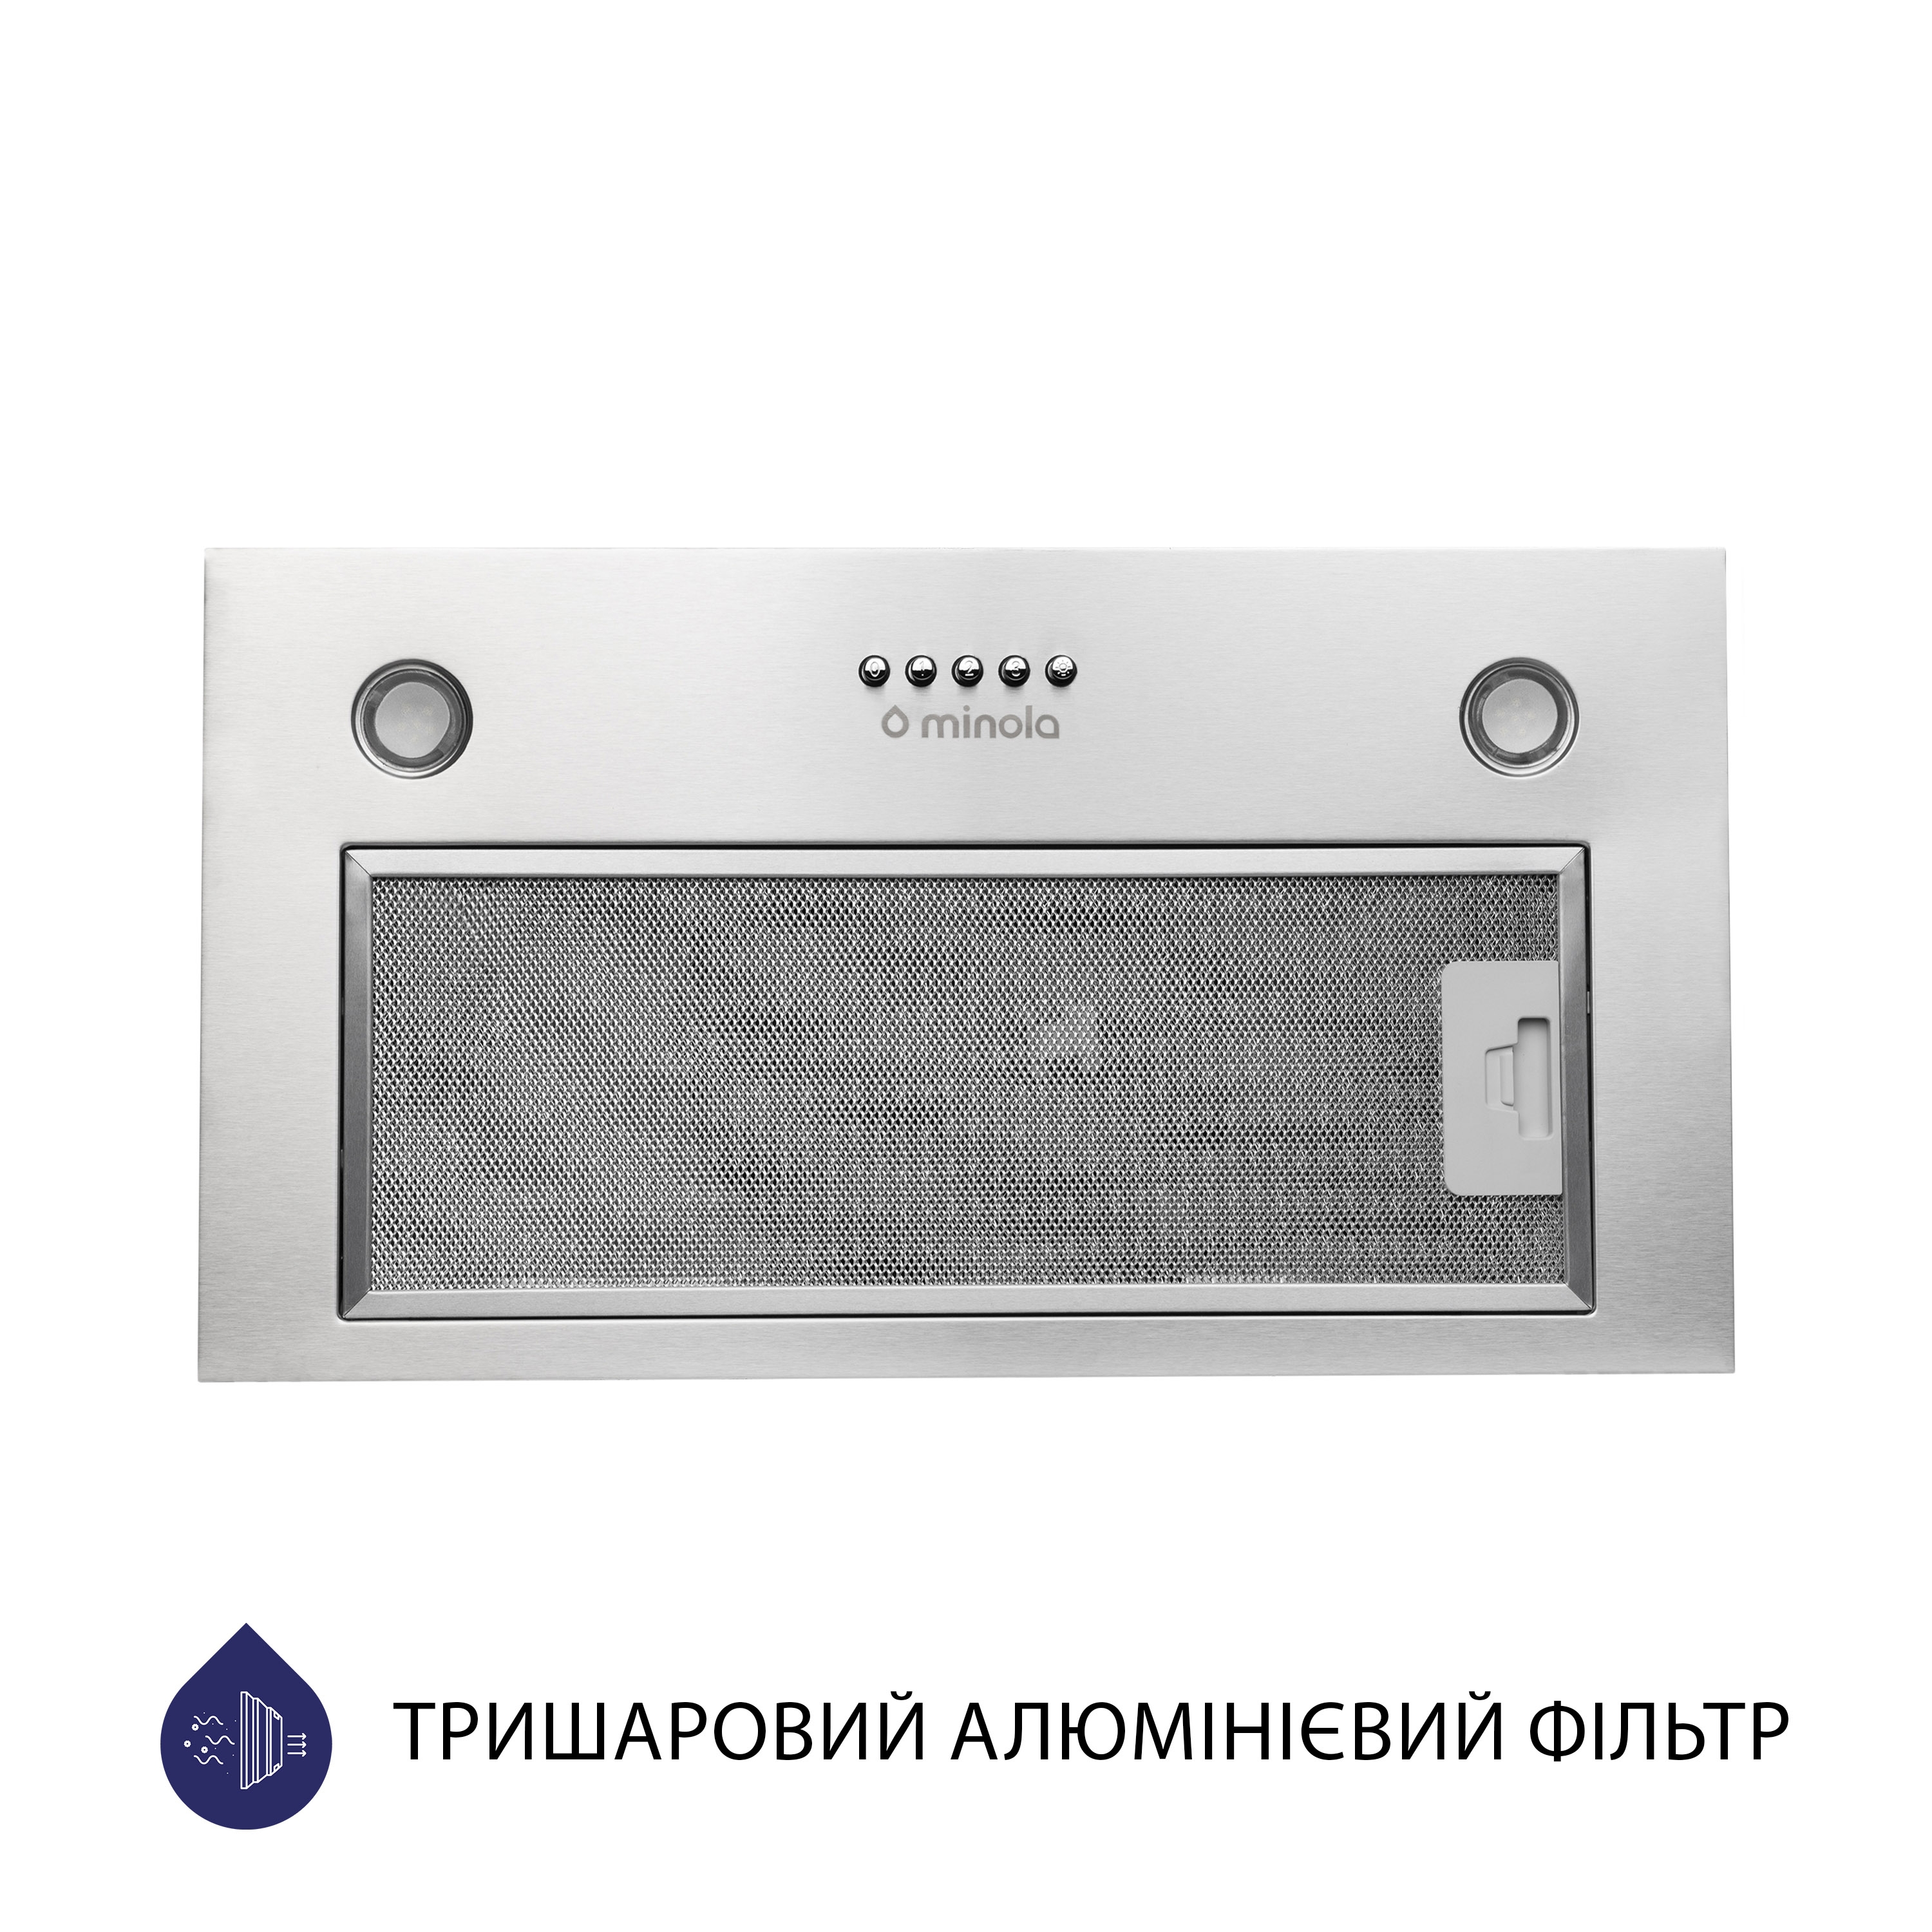 Витяжка кухонная полновстраиваемая Minola HBI 5827 I 1200 LED цена 4499.00 грн - фотография 2